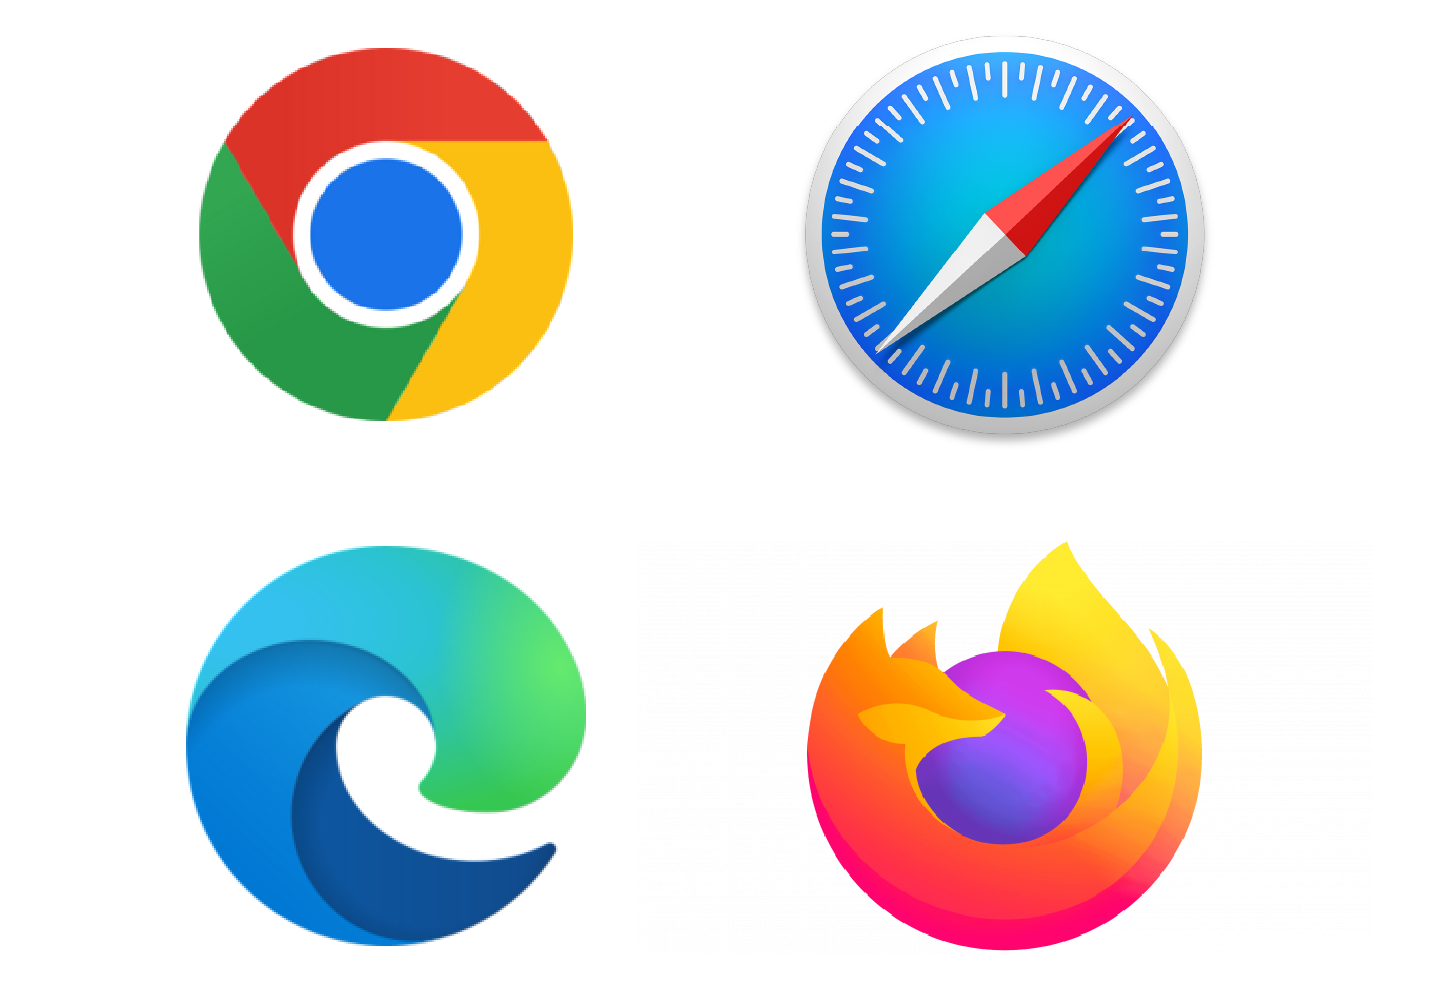 Four of the major web browser logos, Chrome, Safari, Edge and Firefox